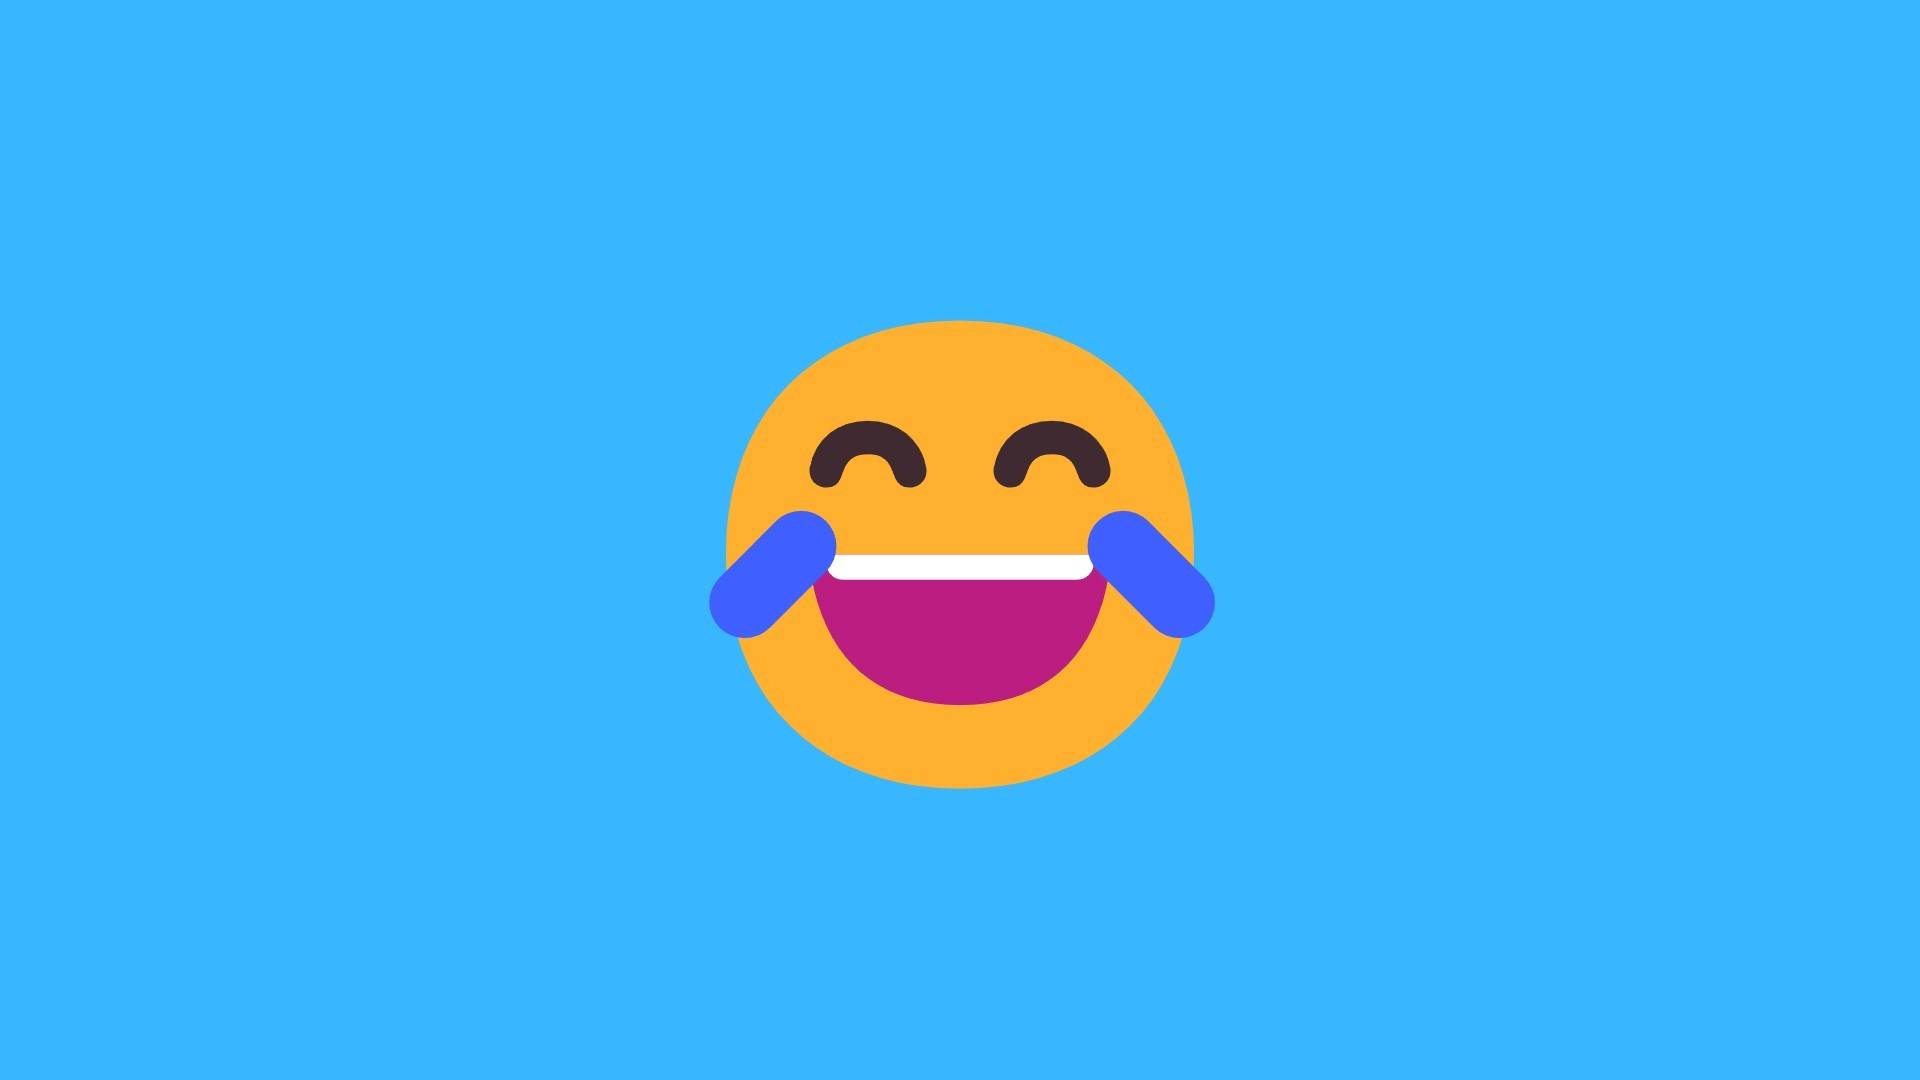 Emoji 1 Face with Tears of Joy